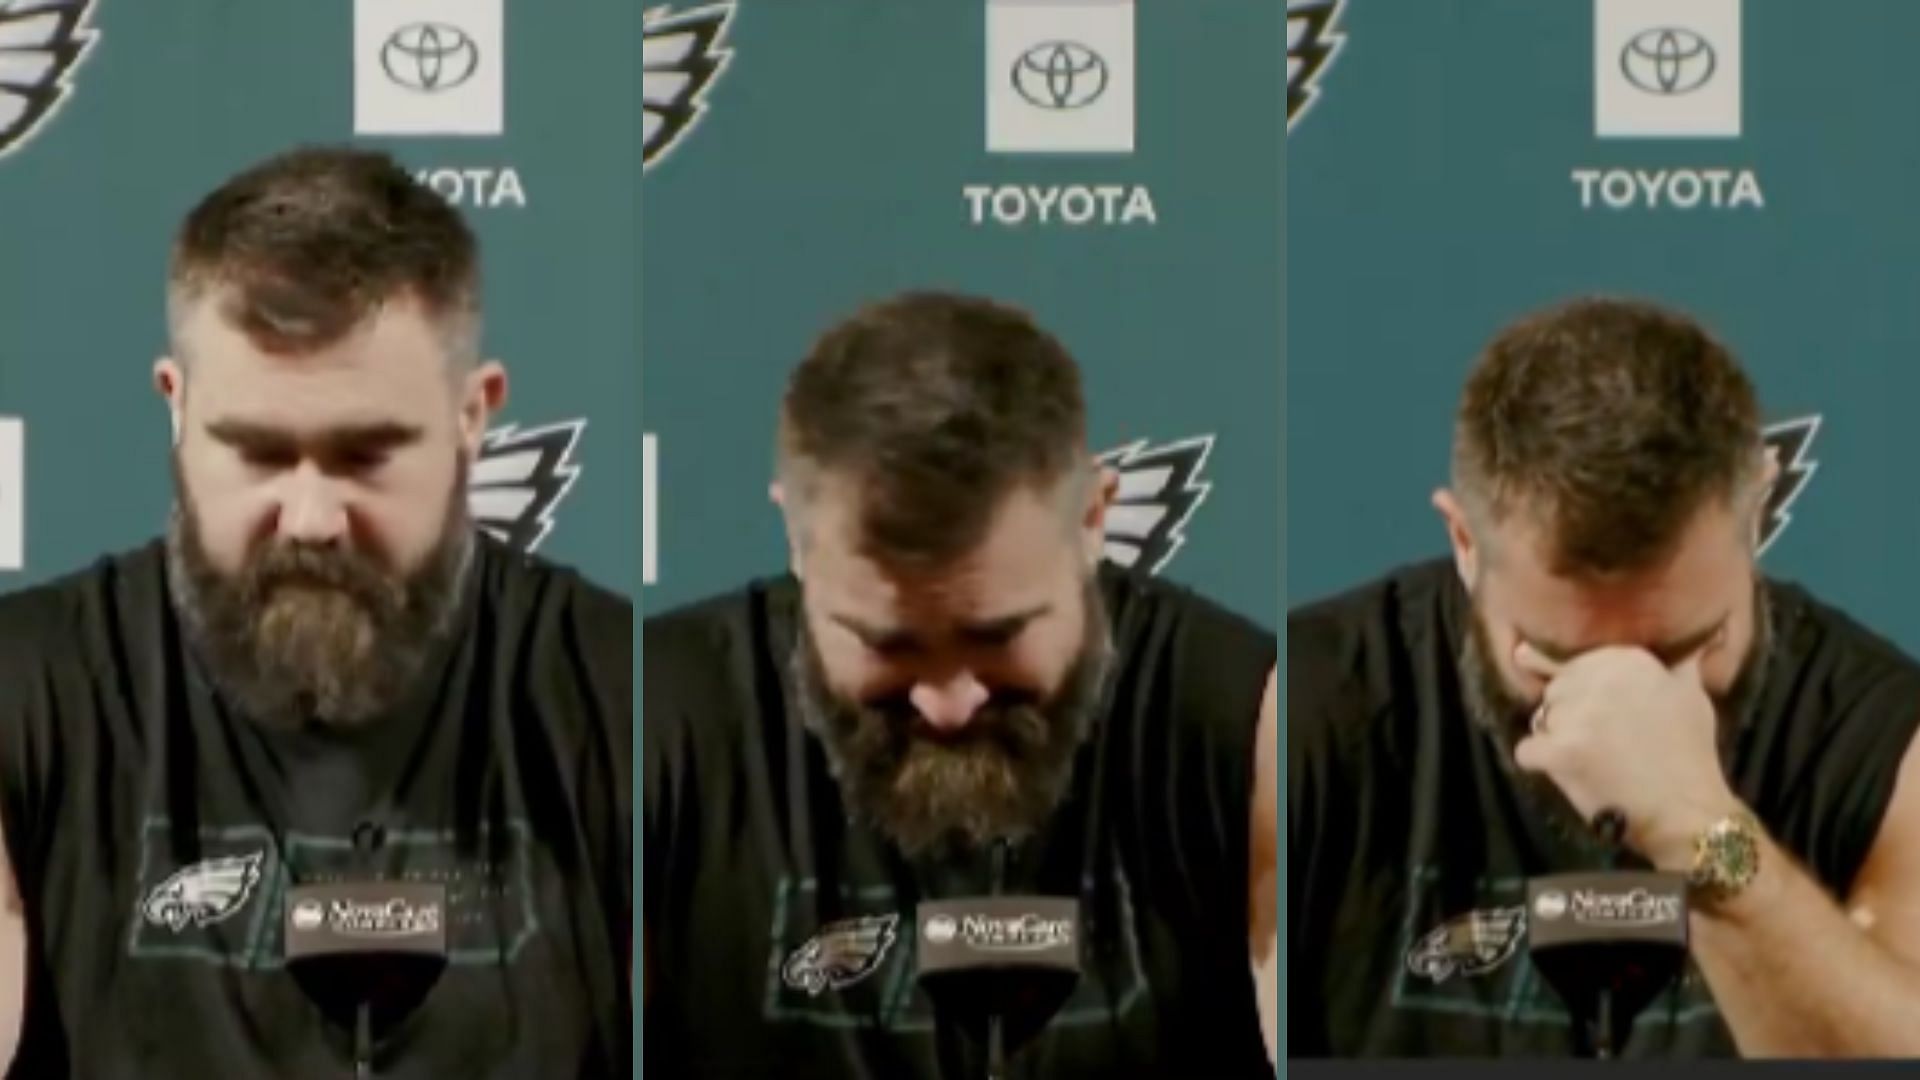 Jason Kelce breaks down in tears during retirement press conference